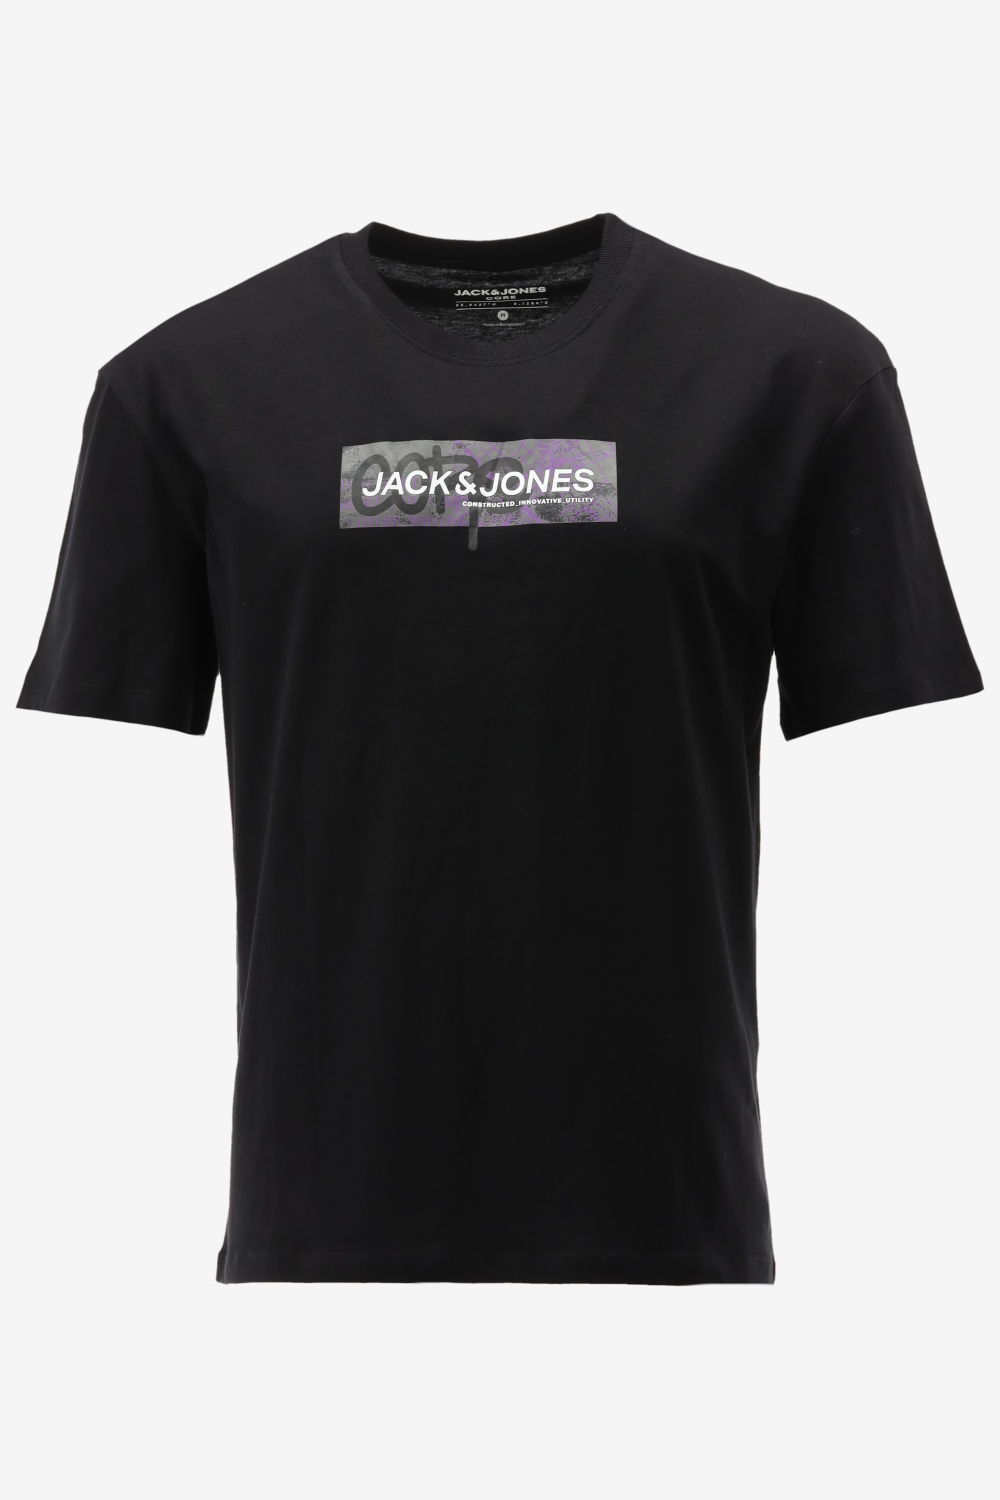 Jack&Jones T-shirt AOP 